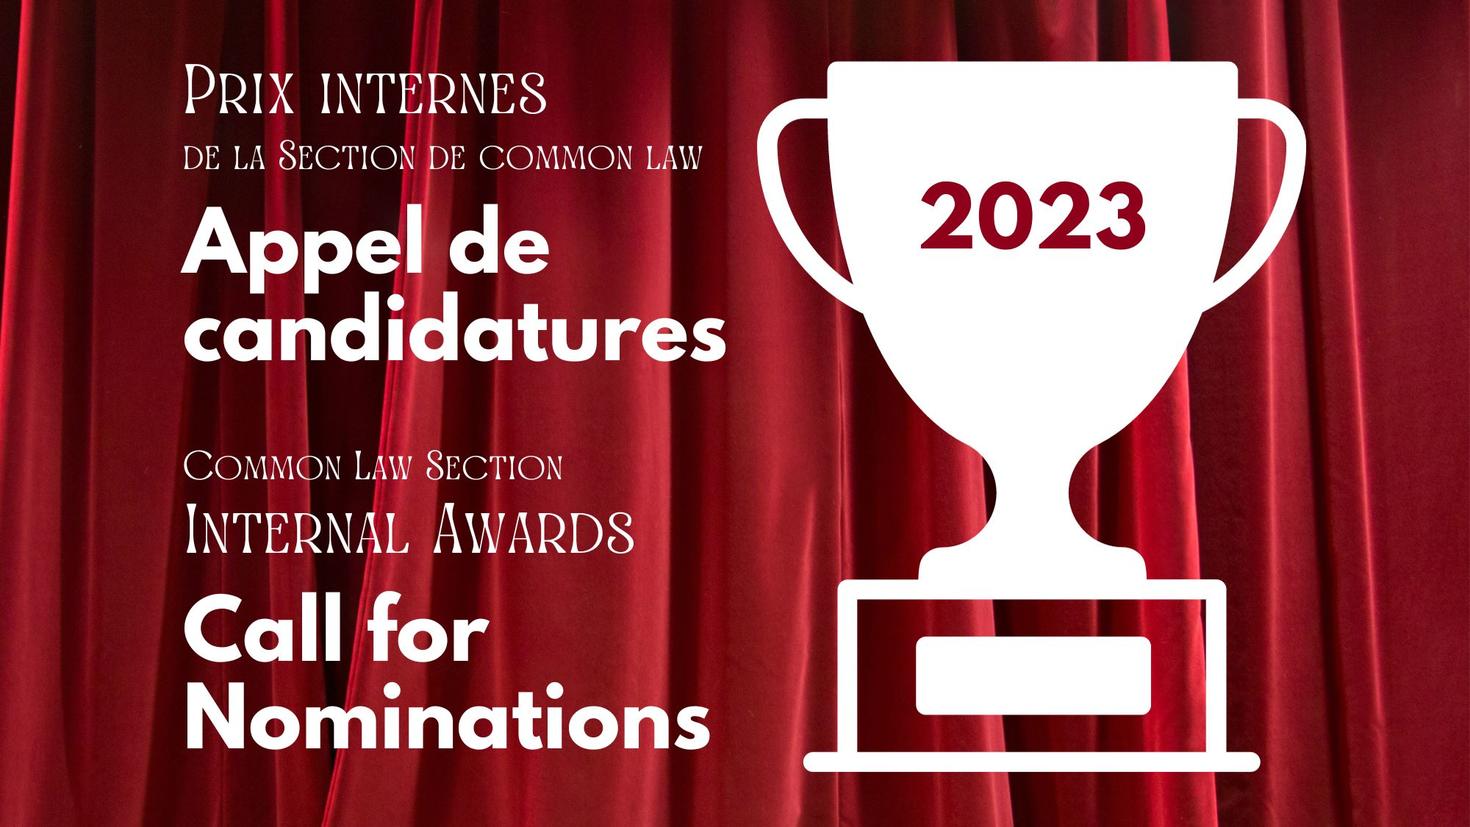 Appel de candidatures - Call for Nominations